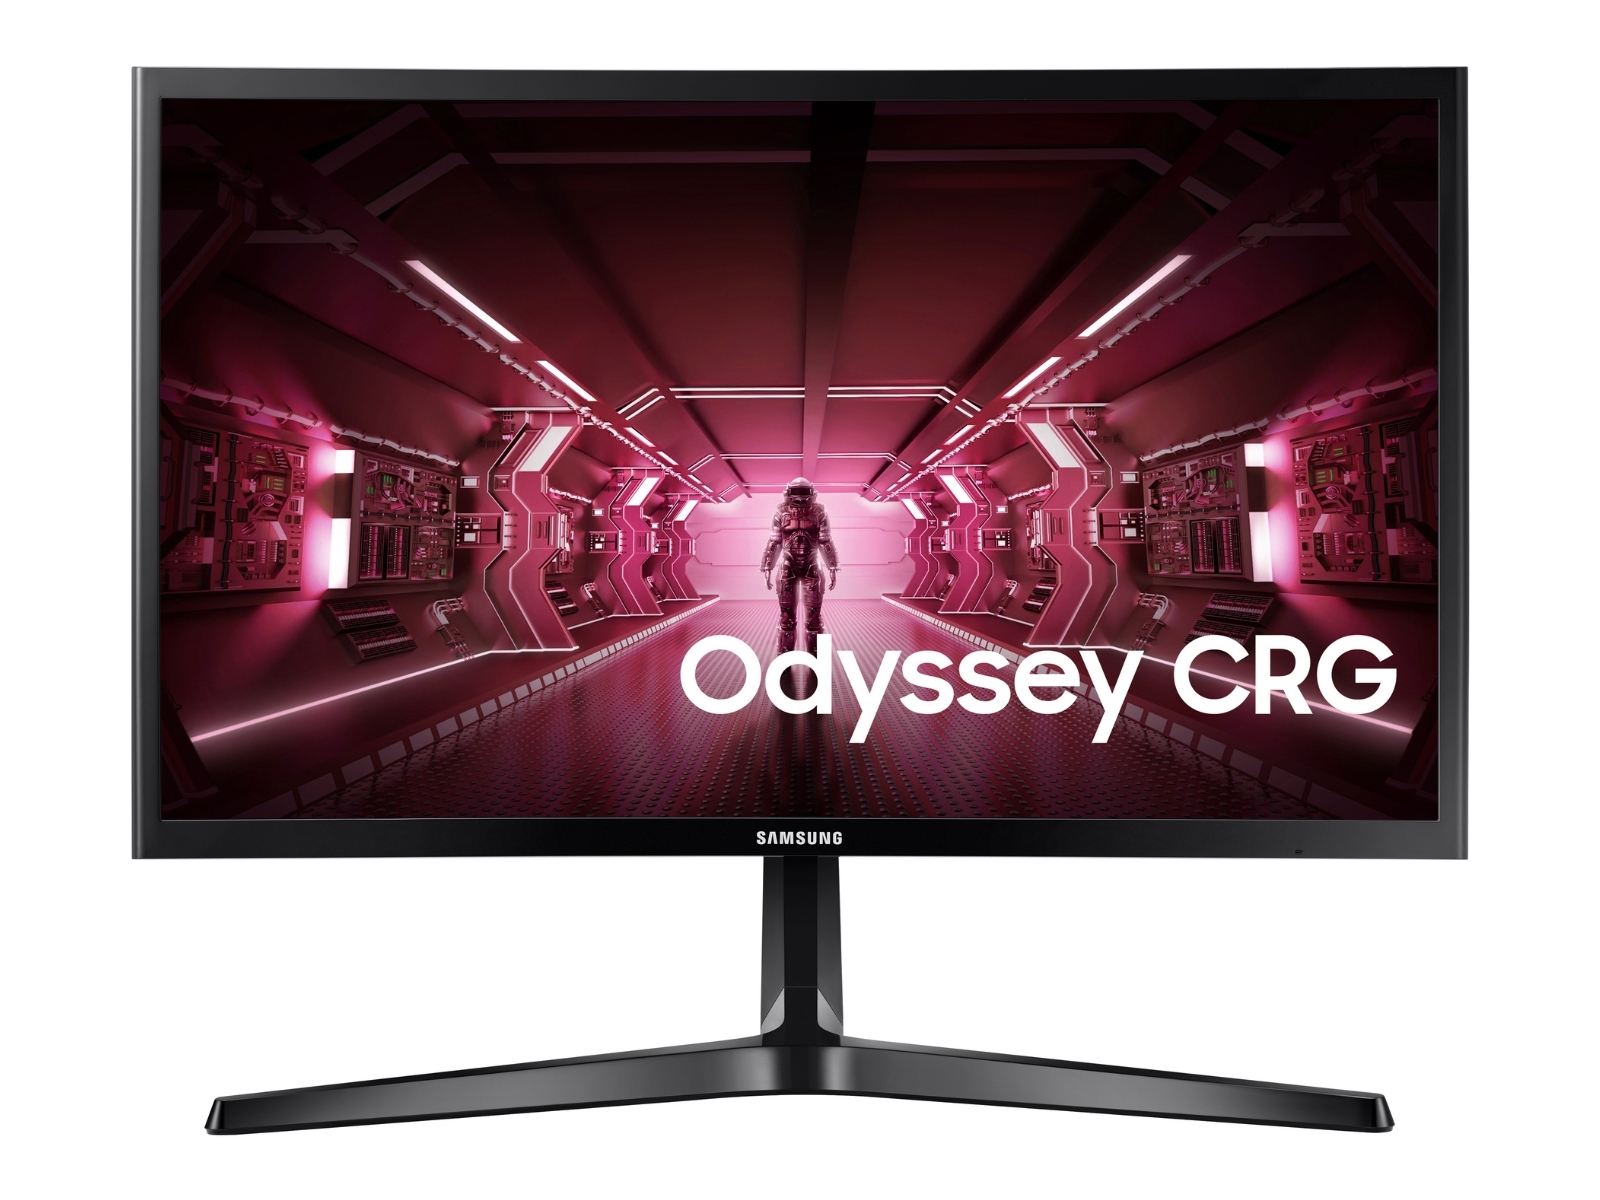 Samsung EDU: 24" Odyssey CGR5 FHD 144Hz Curved Gaming Monitor $120 + Free Shipping